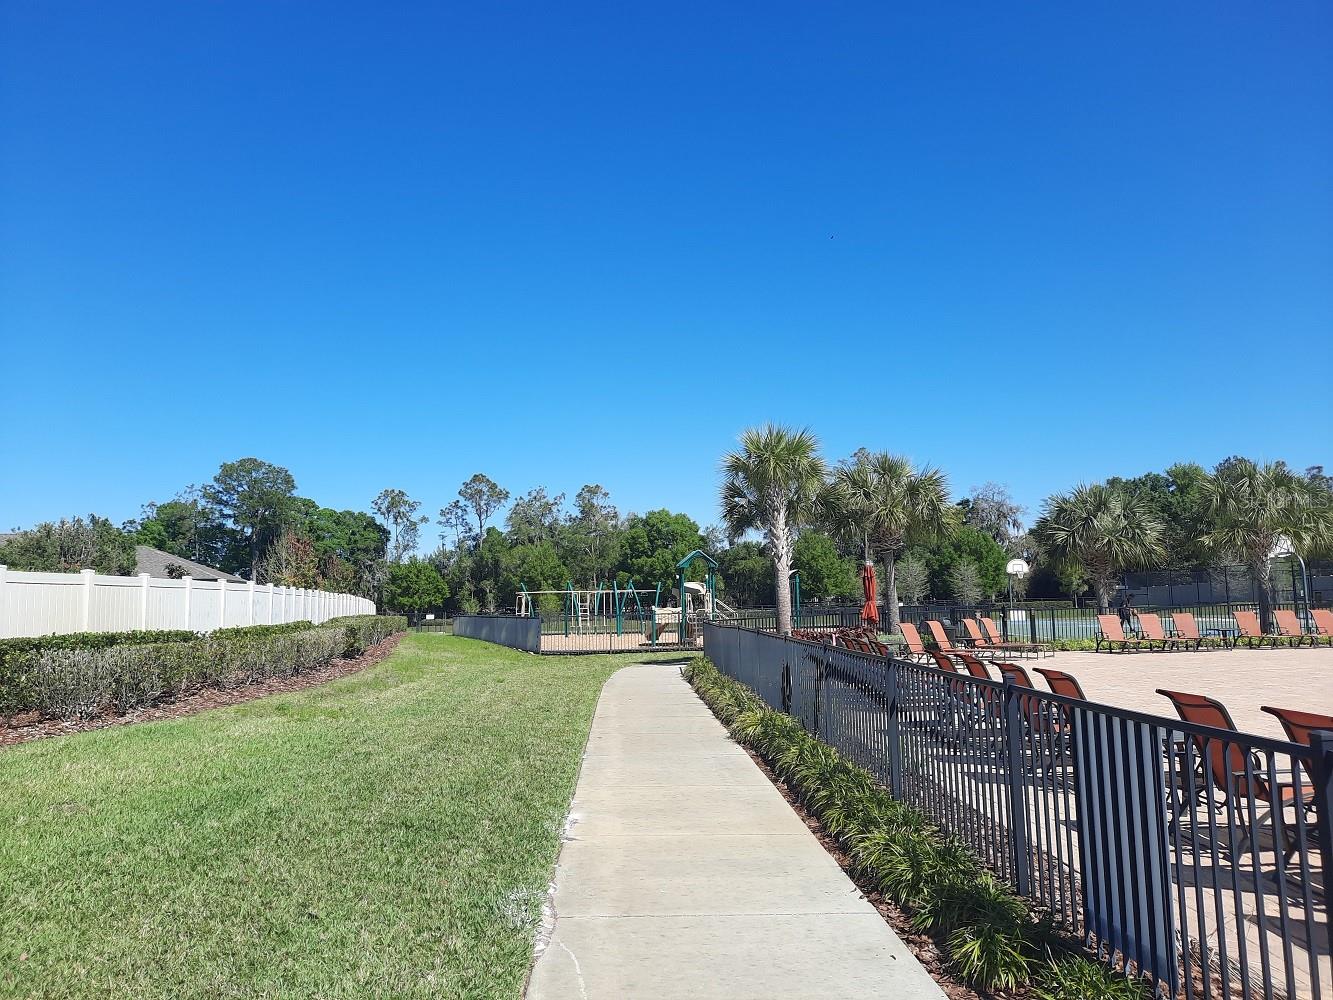 Gated Walkway to Playground, Basketball, & Tennis